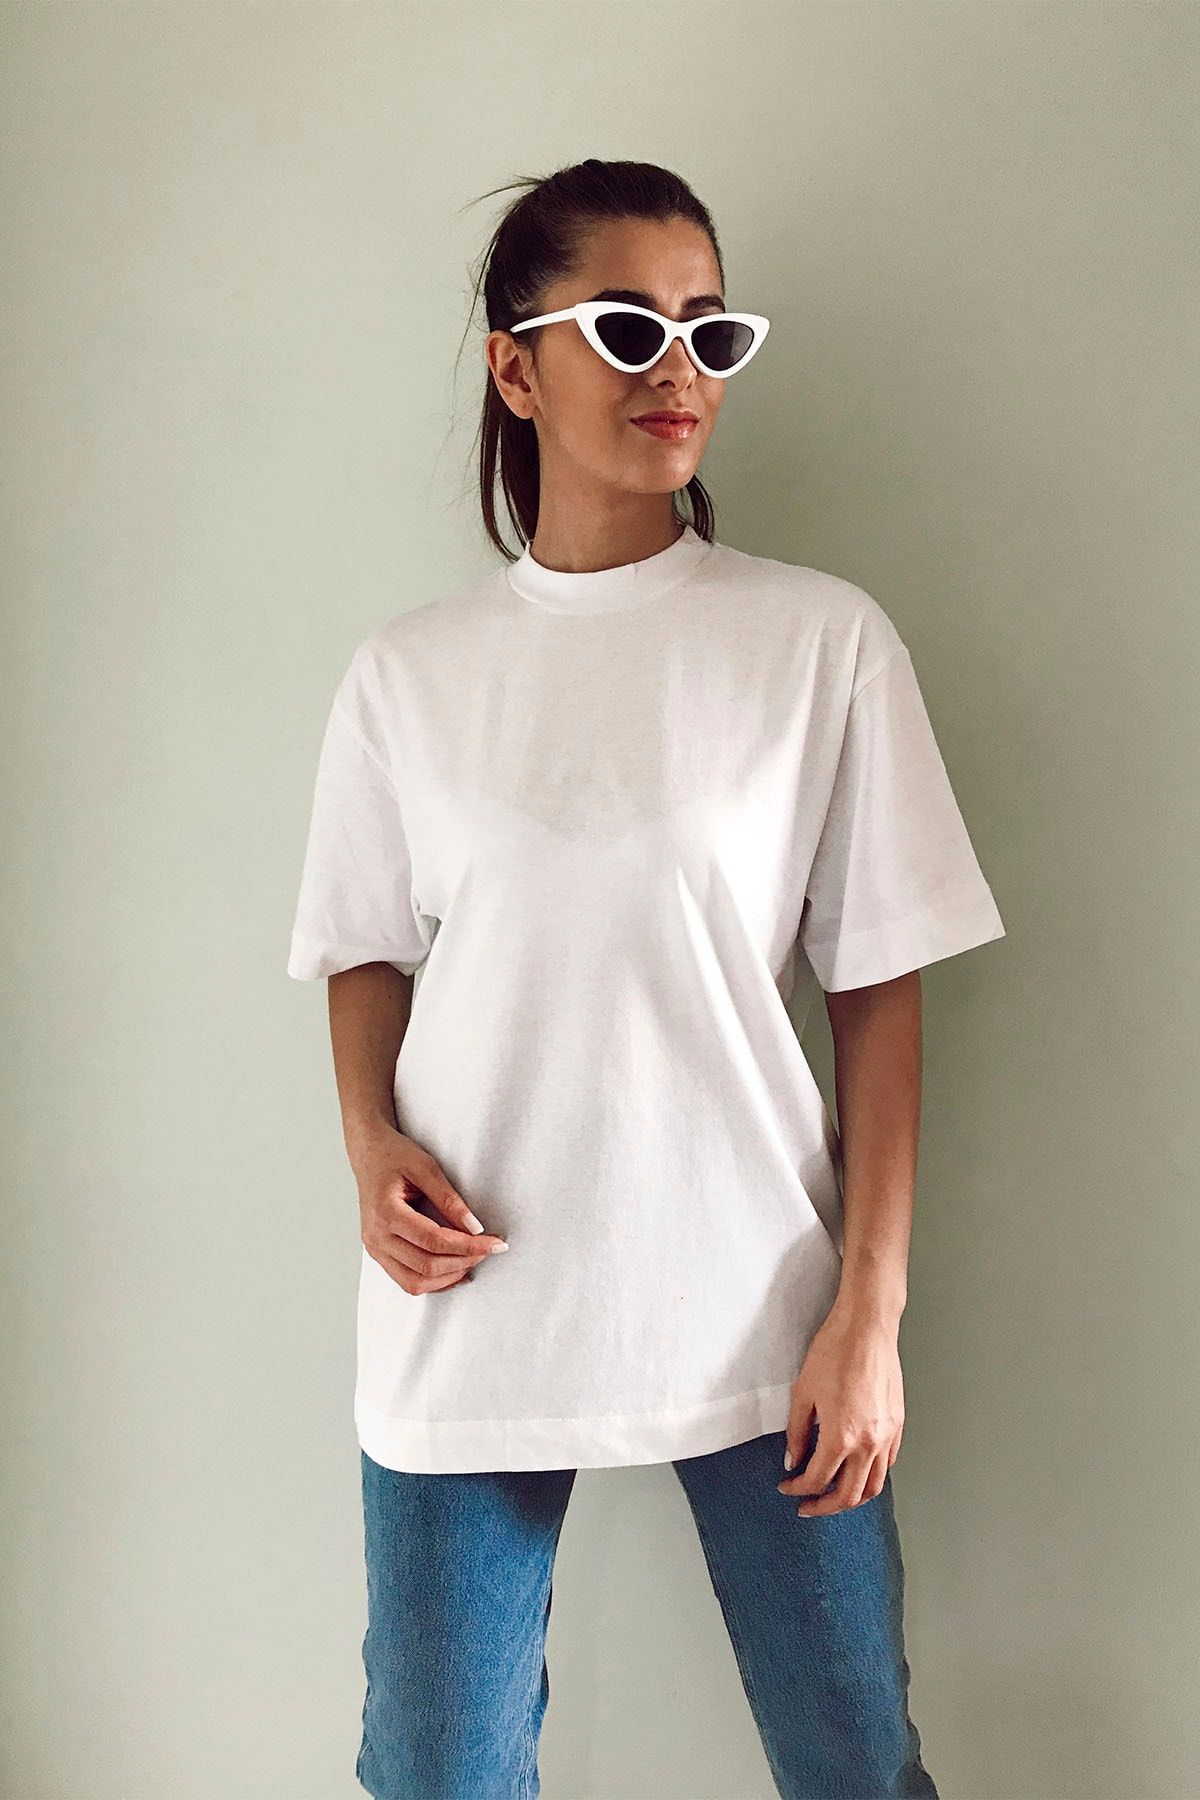 tiamoda Kadın Boyfriend Örme T-shirt Beyaz